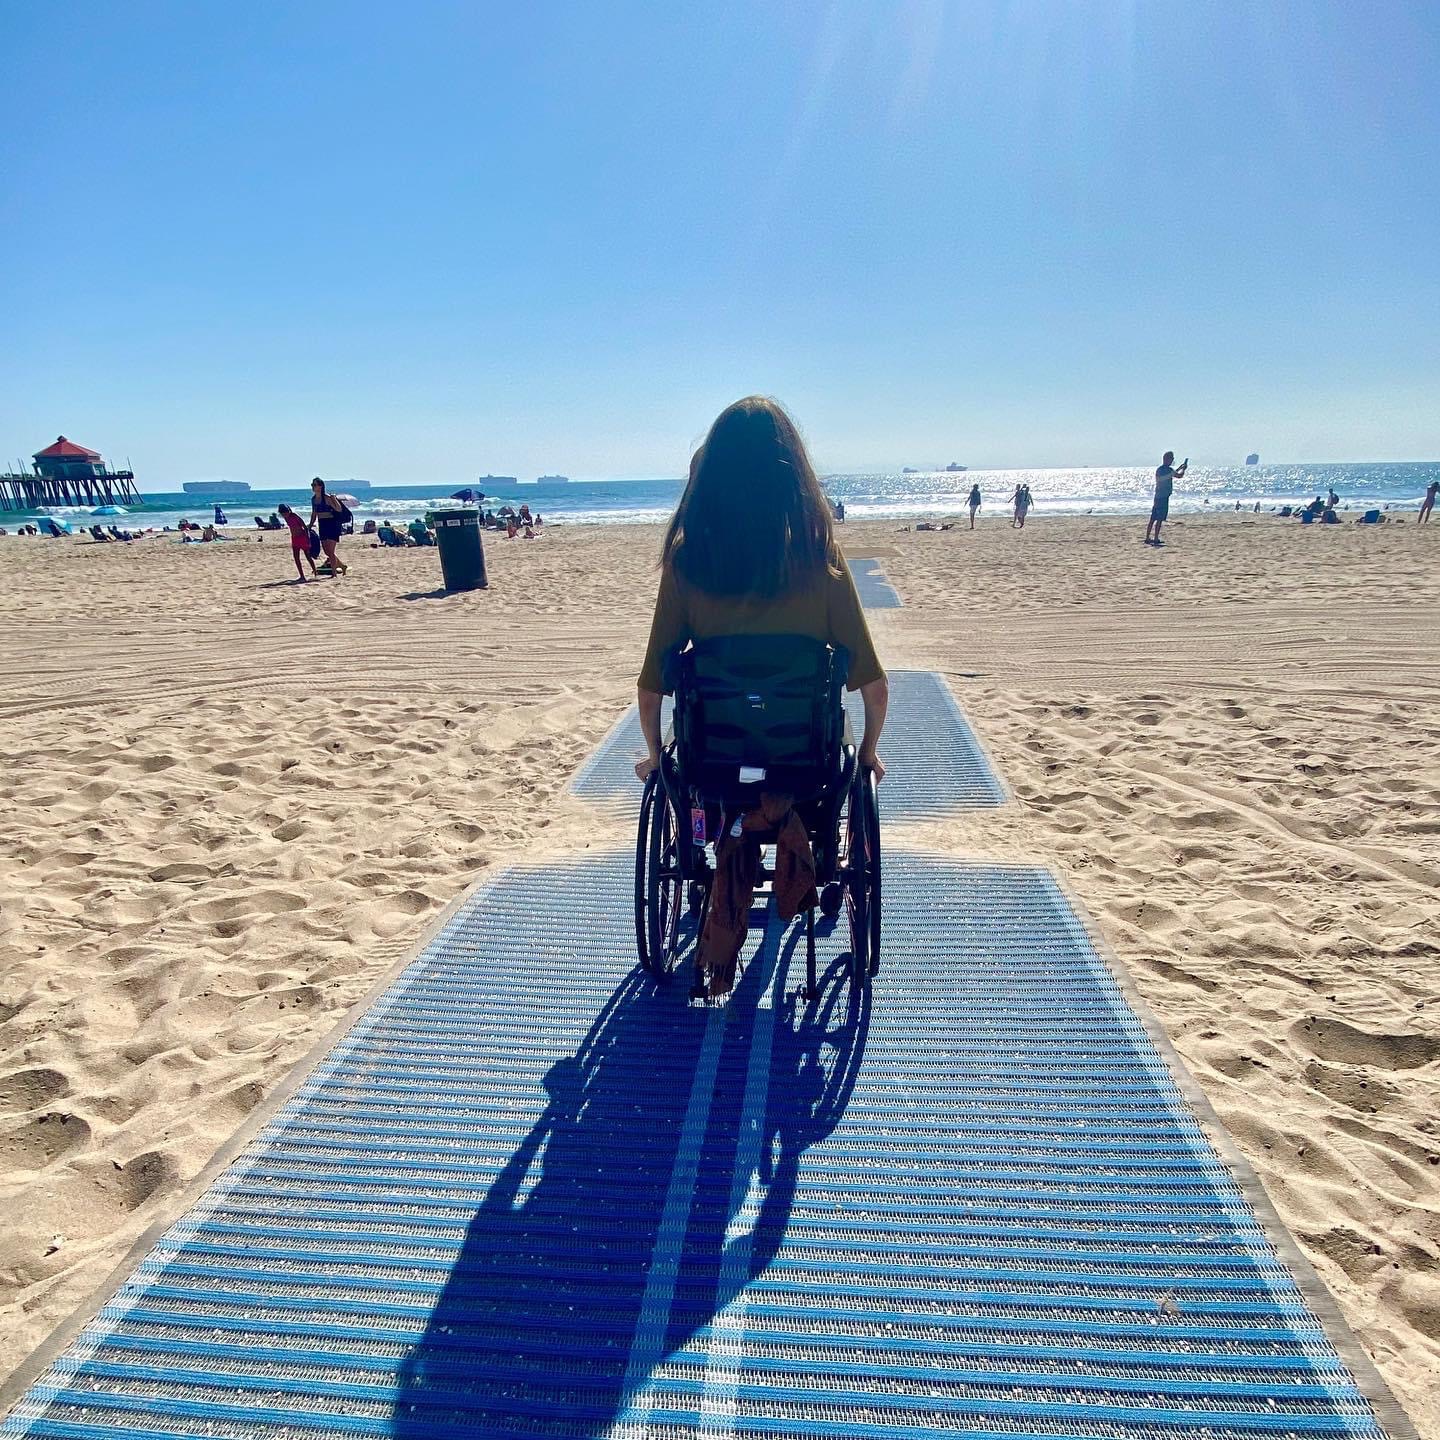 Abigail adaptive surfs in California